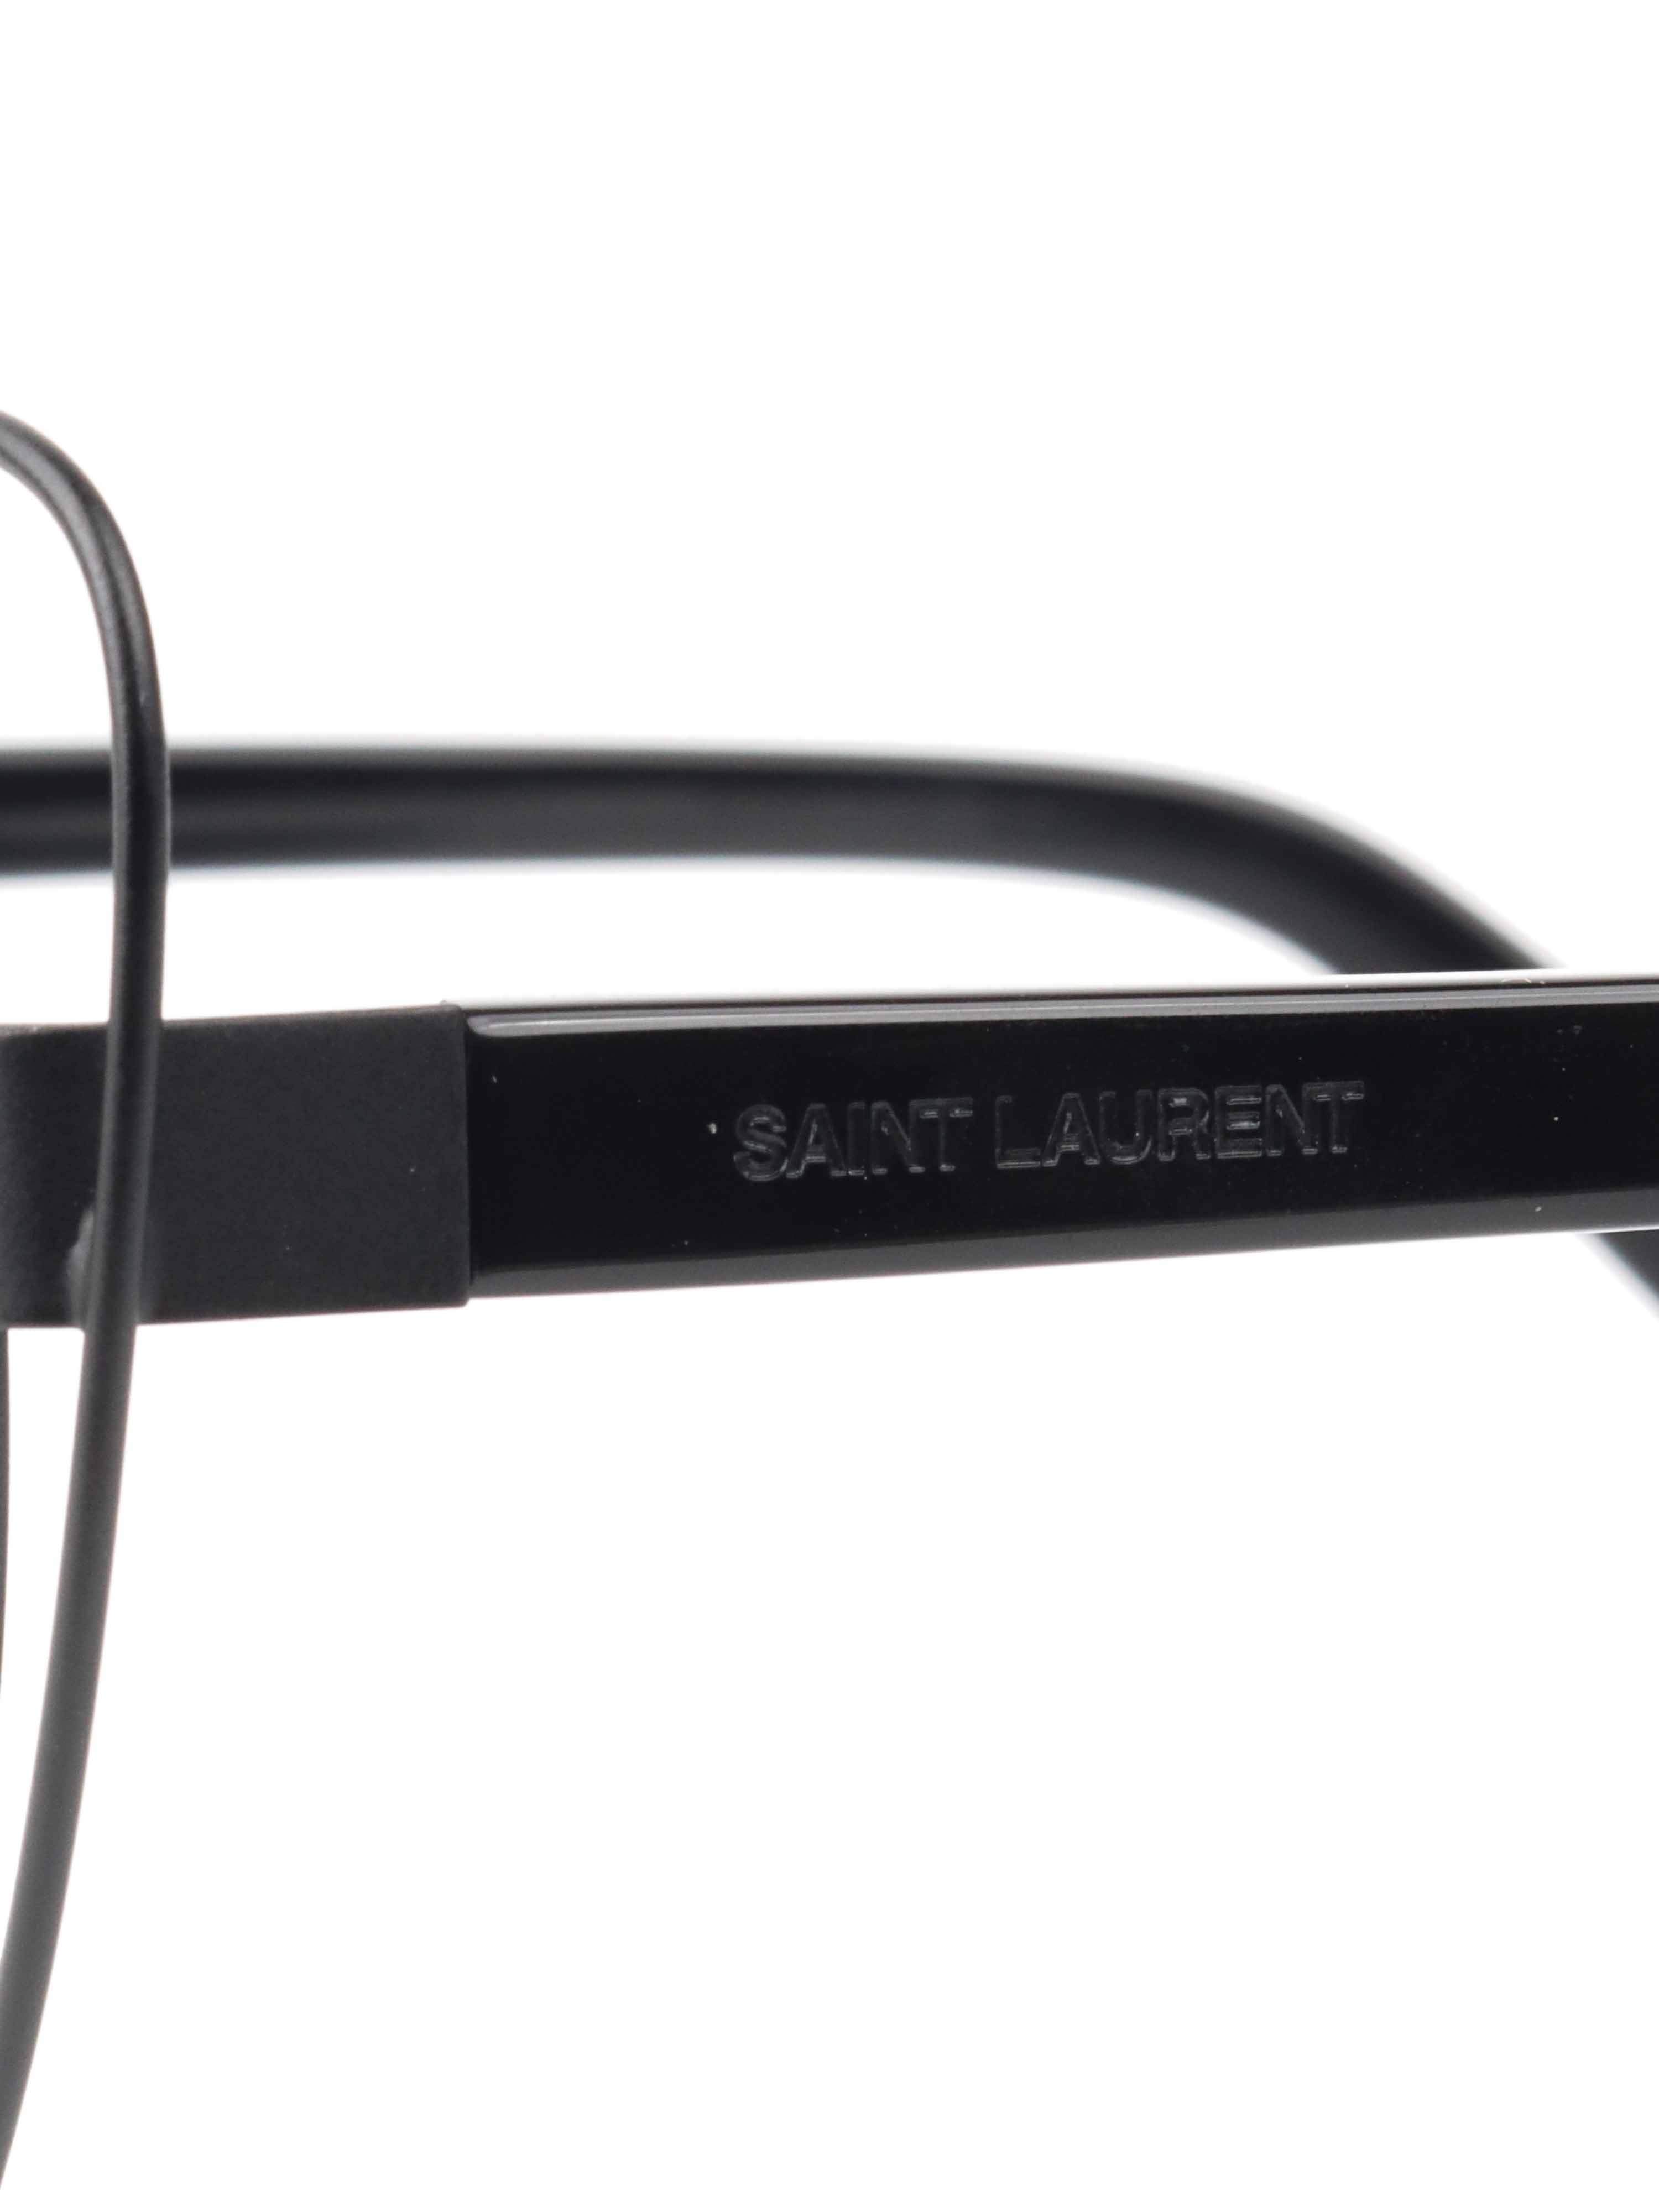 Saint Laurent Black Heart Sunglasses.